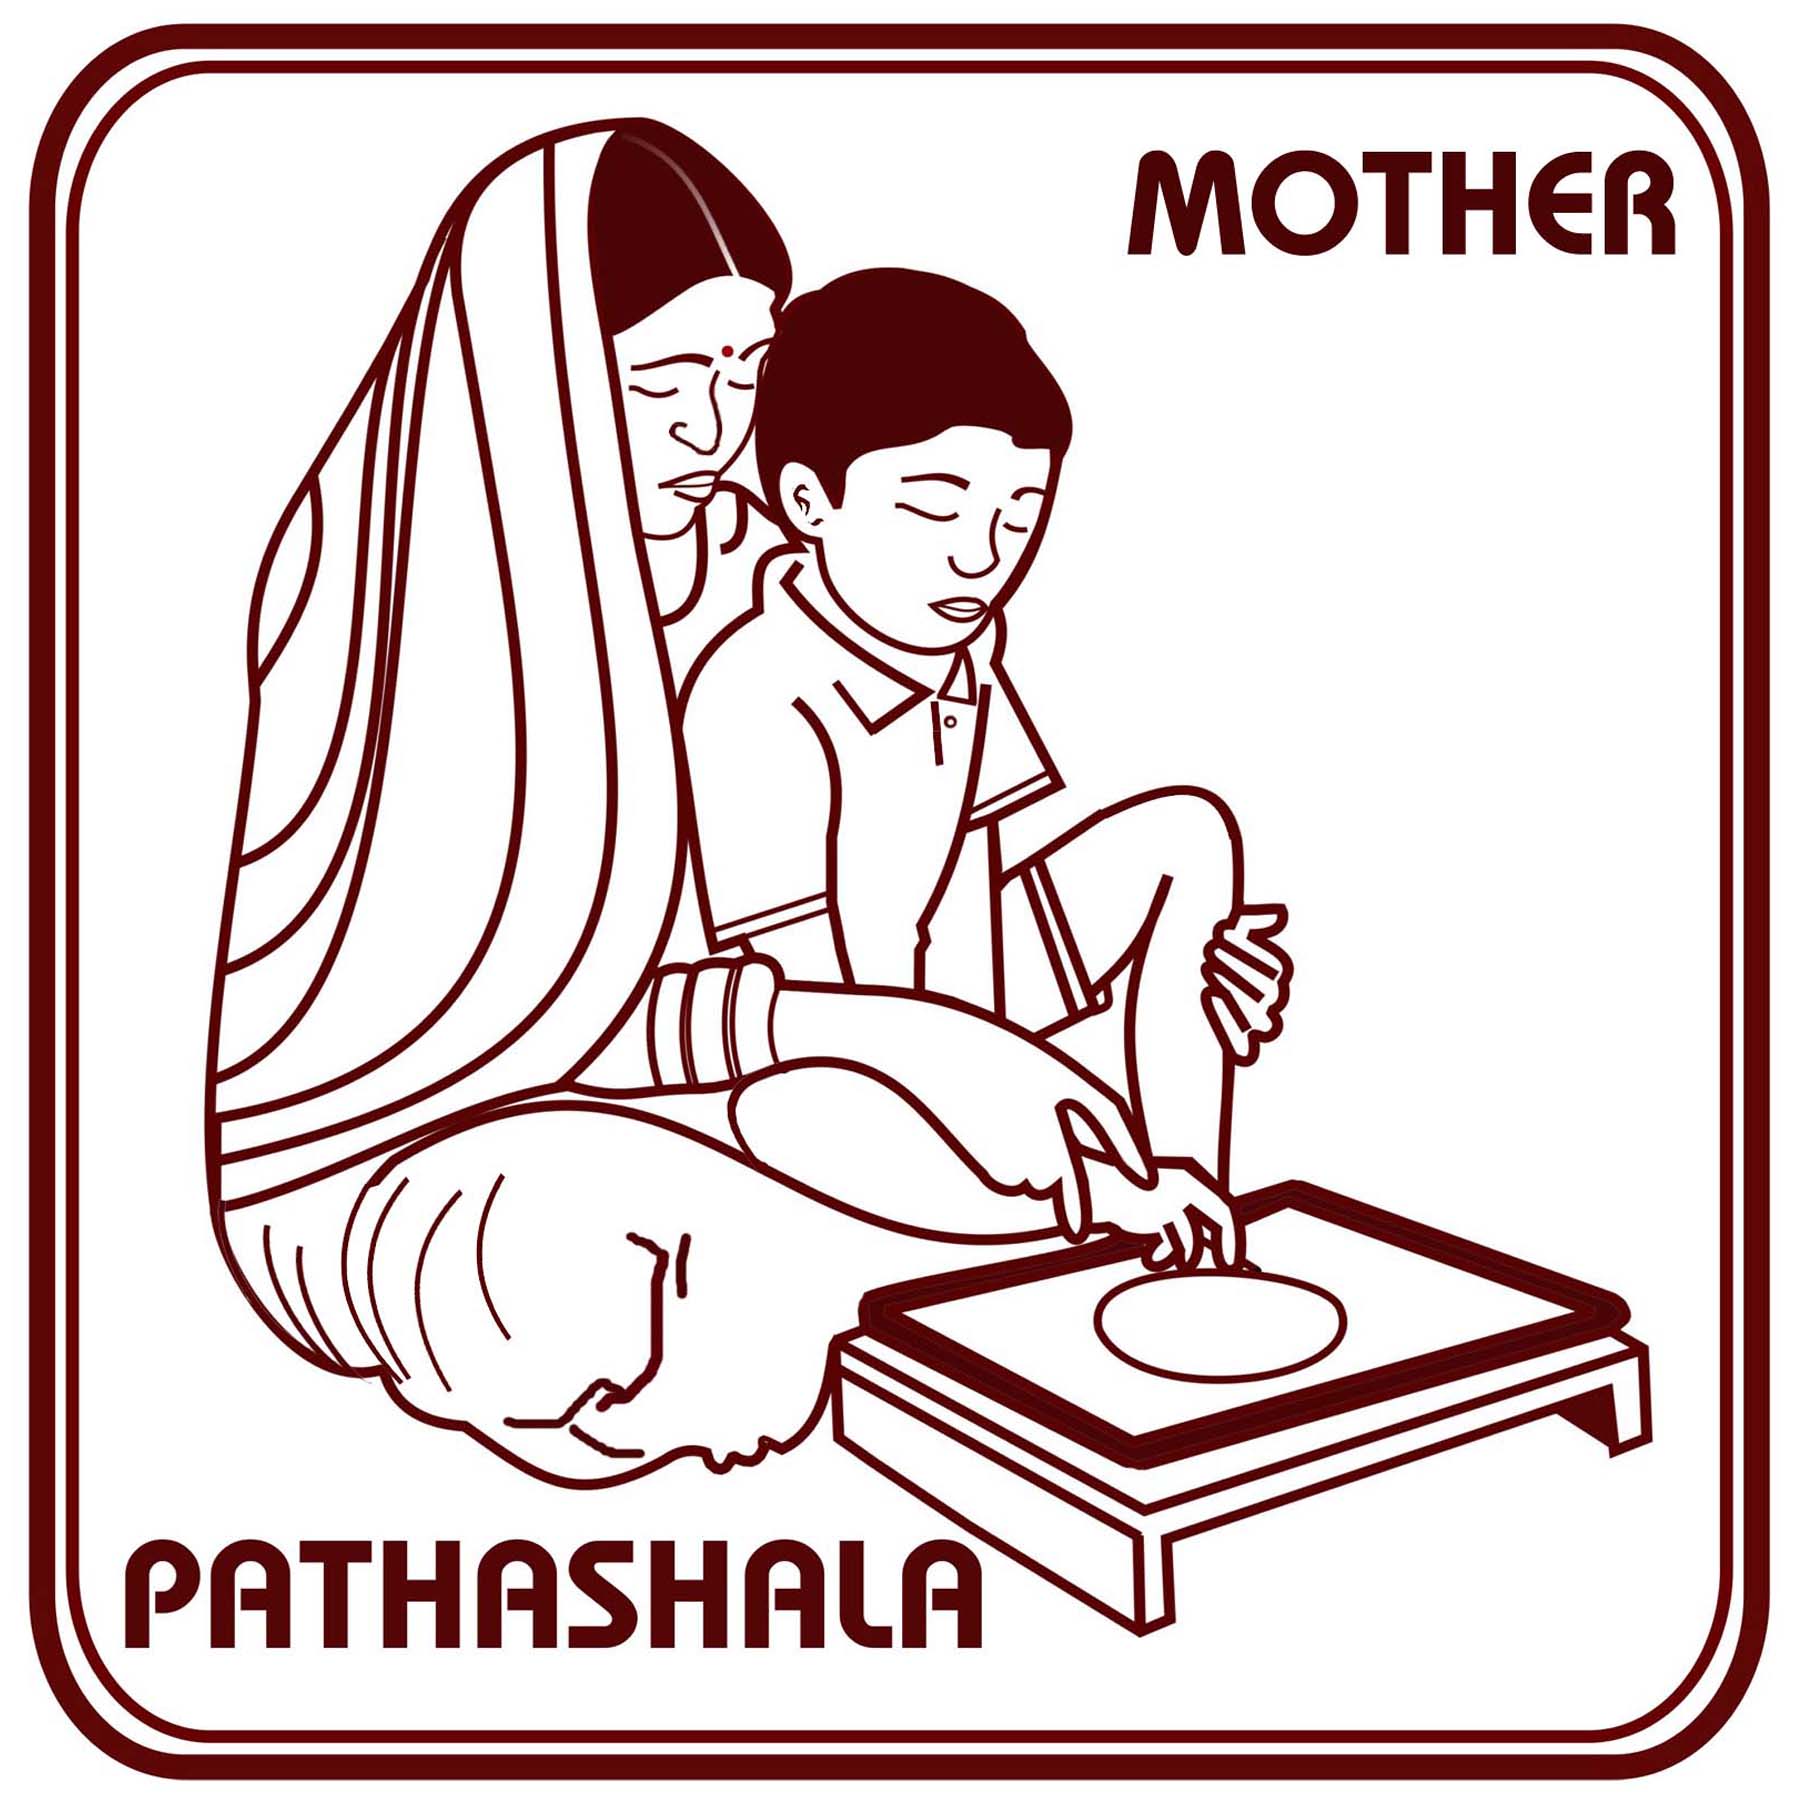 MOTHER PATHASHALA